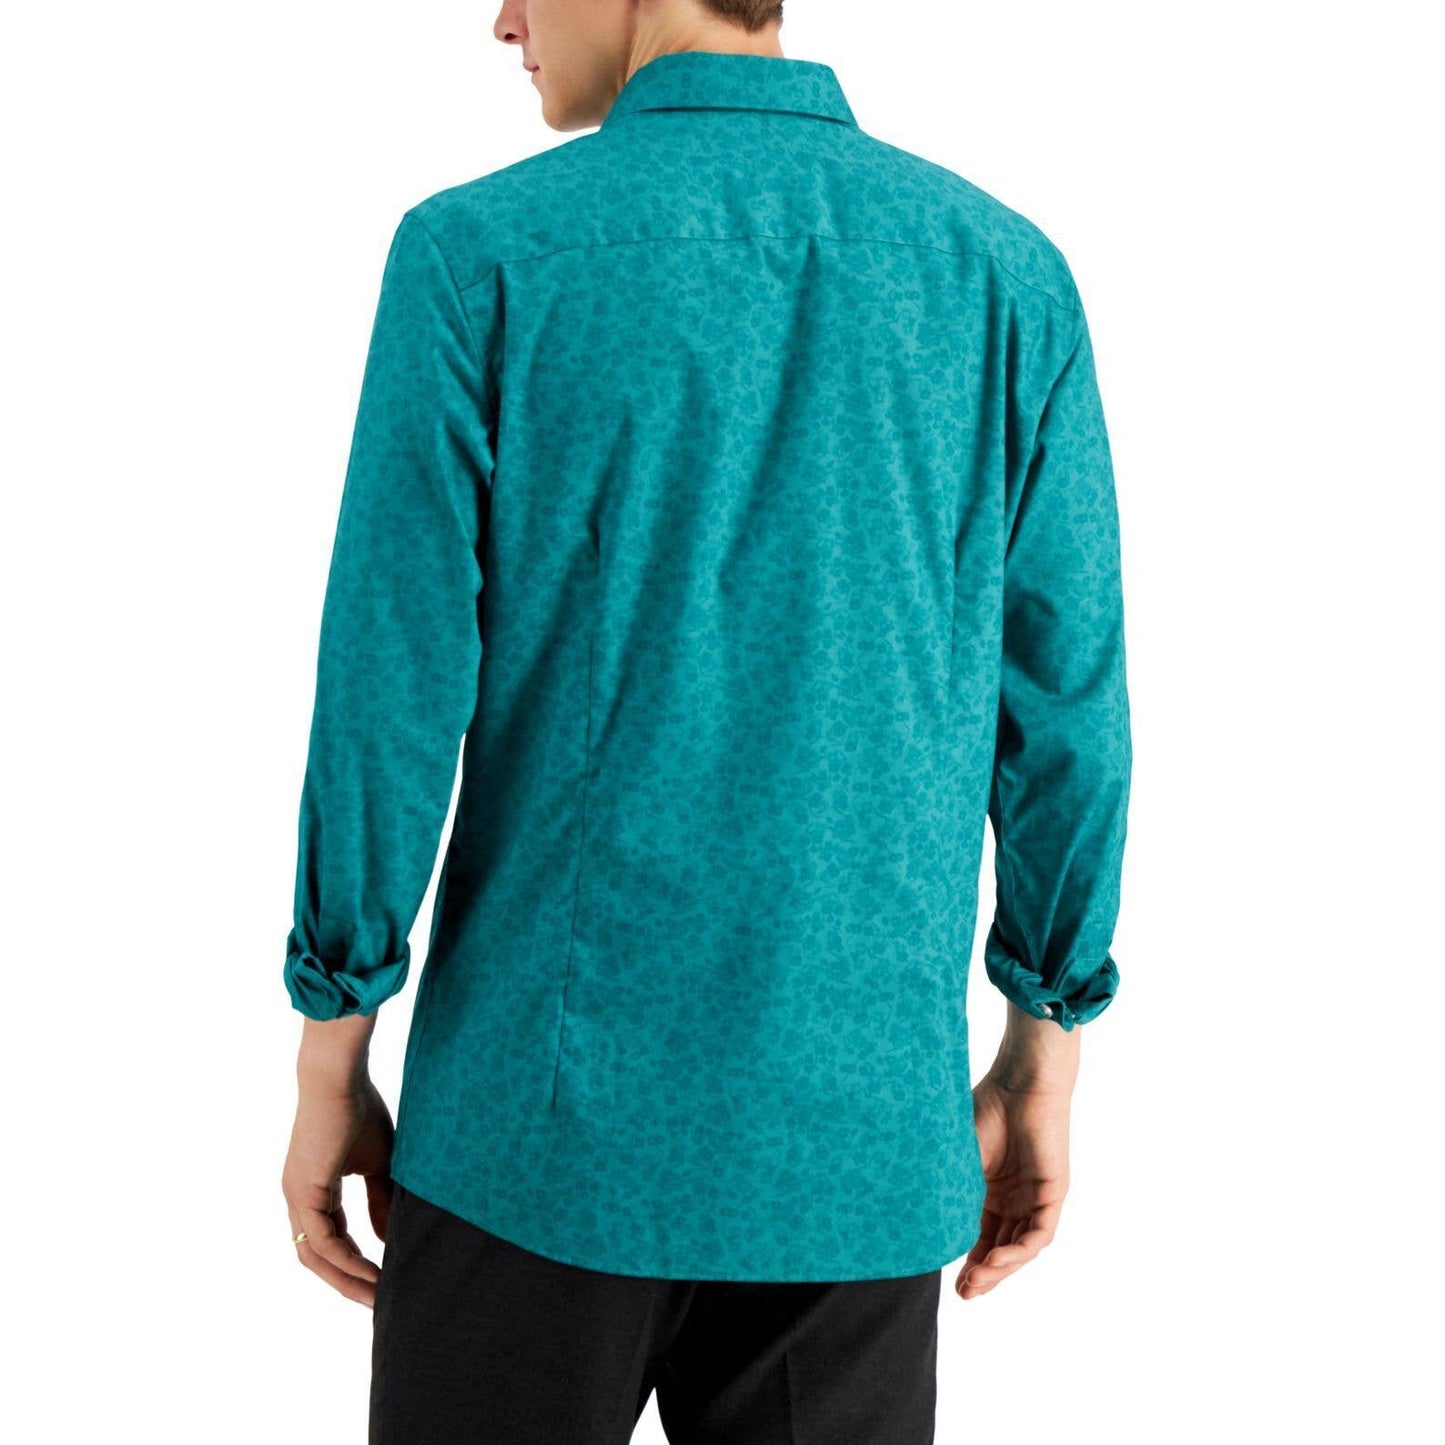 BAR III Men's Emerald Green Sublte Floral Print Button Up Dress Shirt, NWT!!